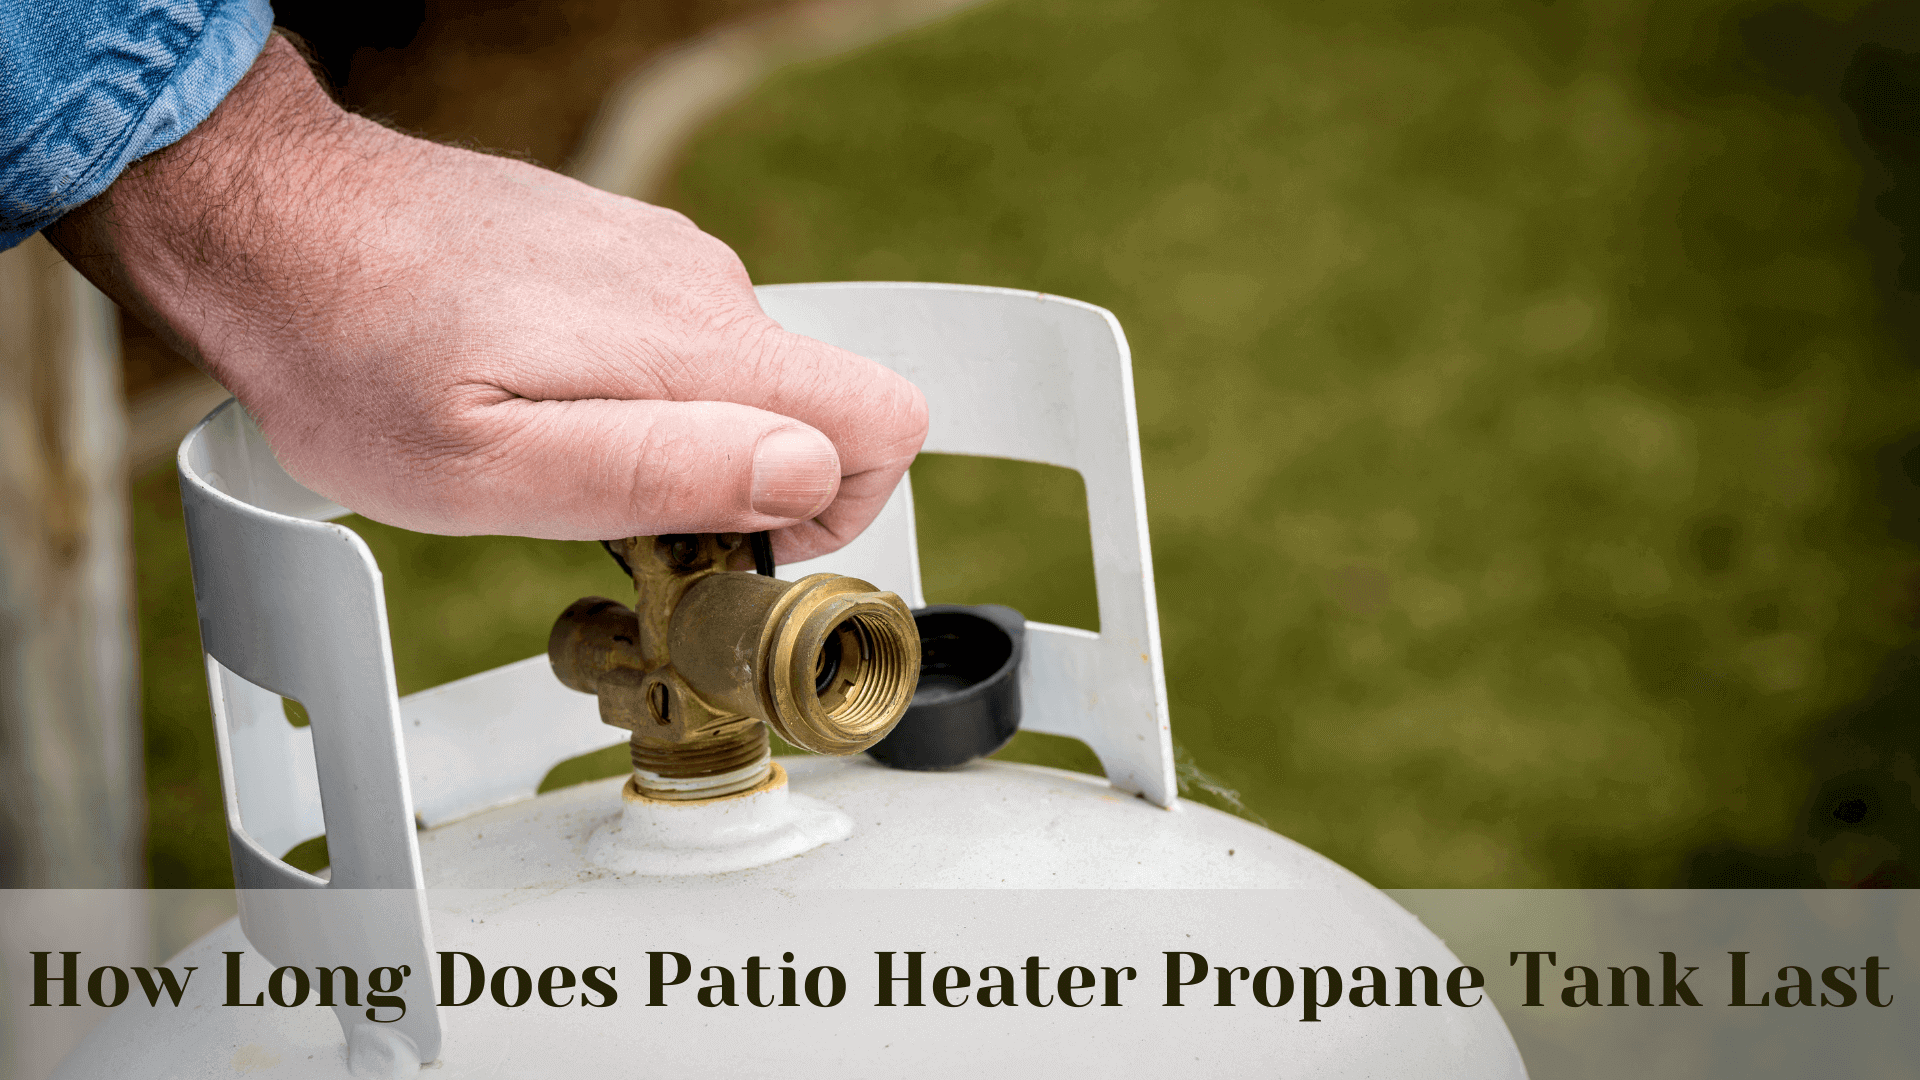 Patio Heater Propane Tank Last